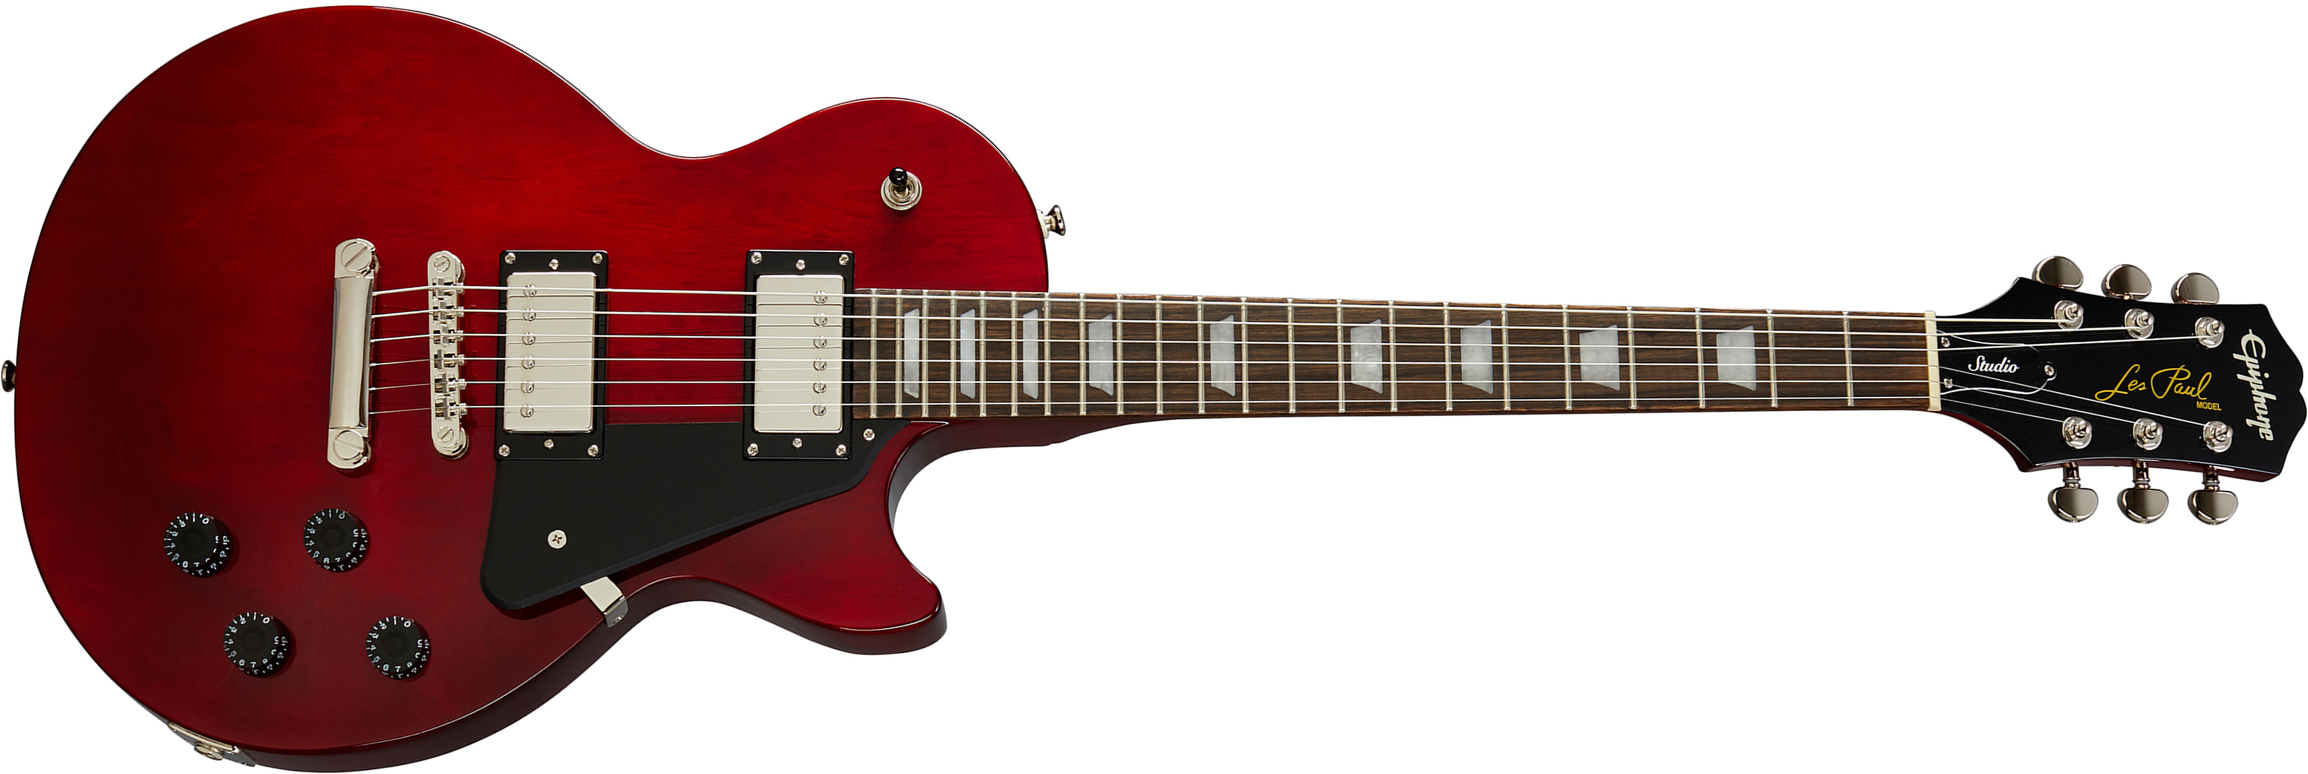 Epiphone Les Paul Studio 2h Ht Pf - Wine Red - Guitarra eléctrica de corte único. - Main picture